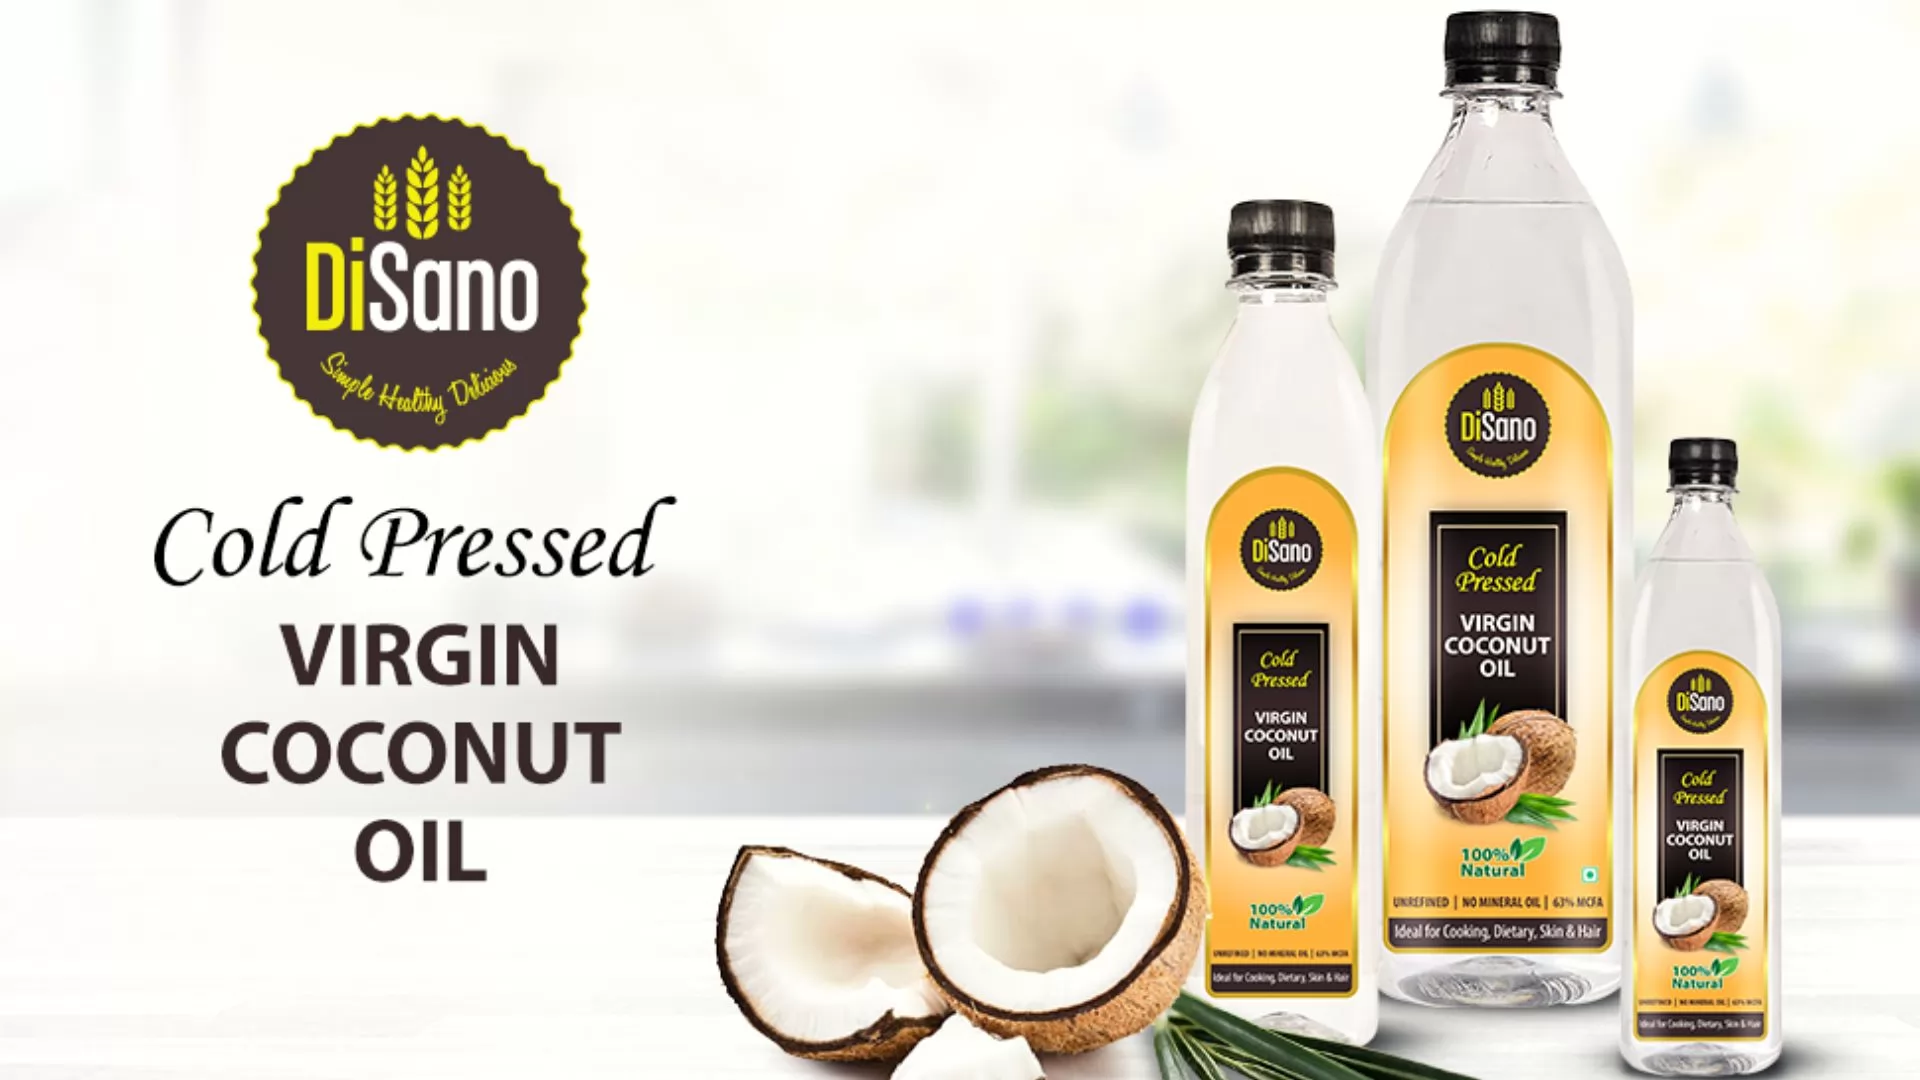 DiSano Cold Pressed Virgin Coconut Oil